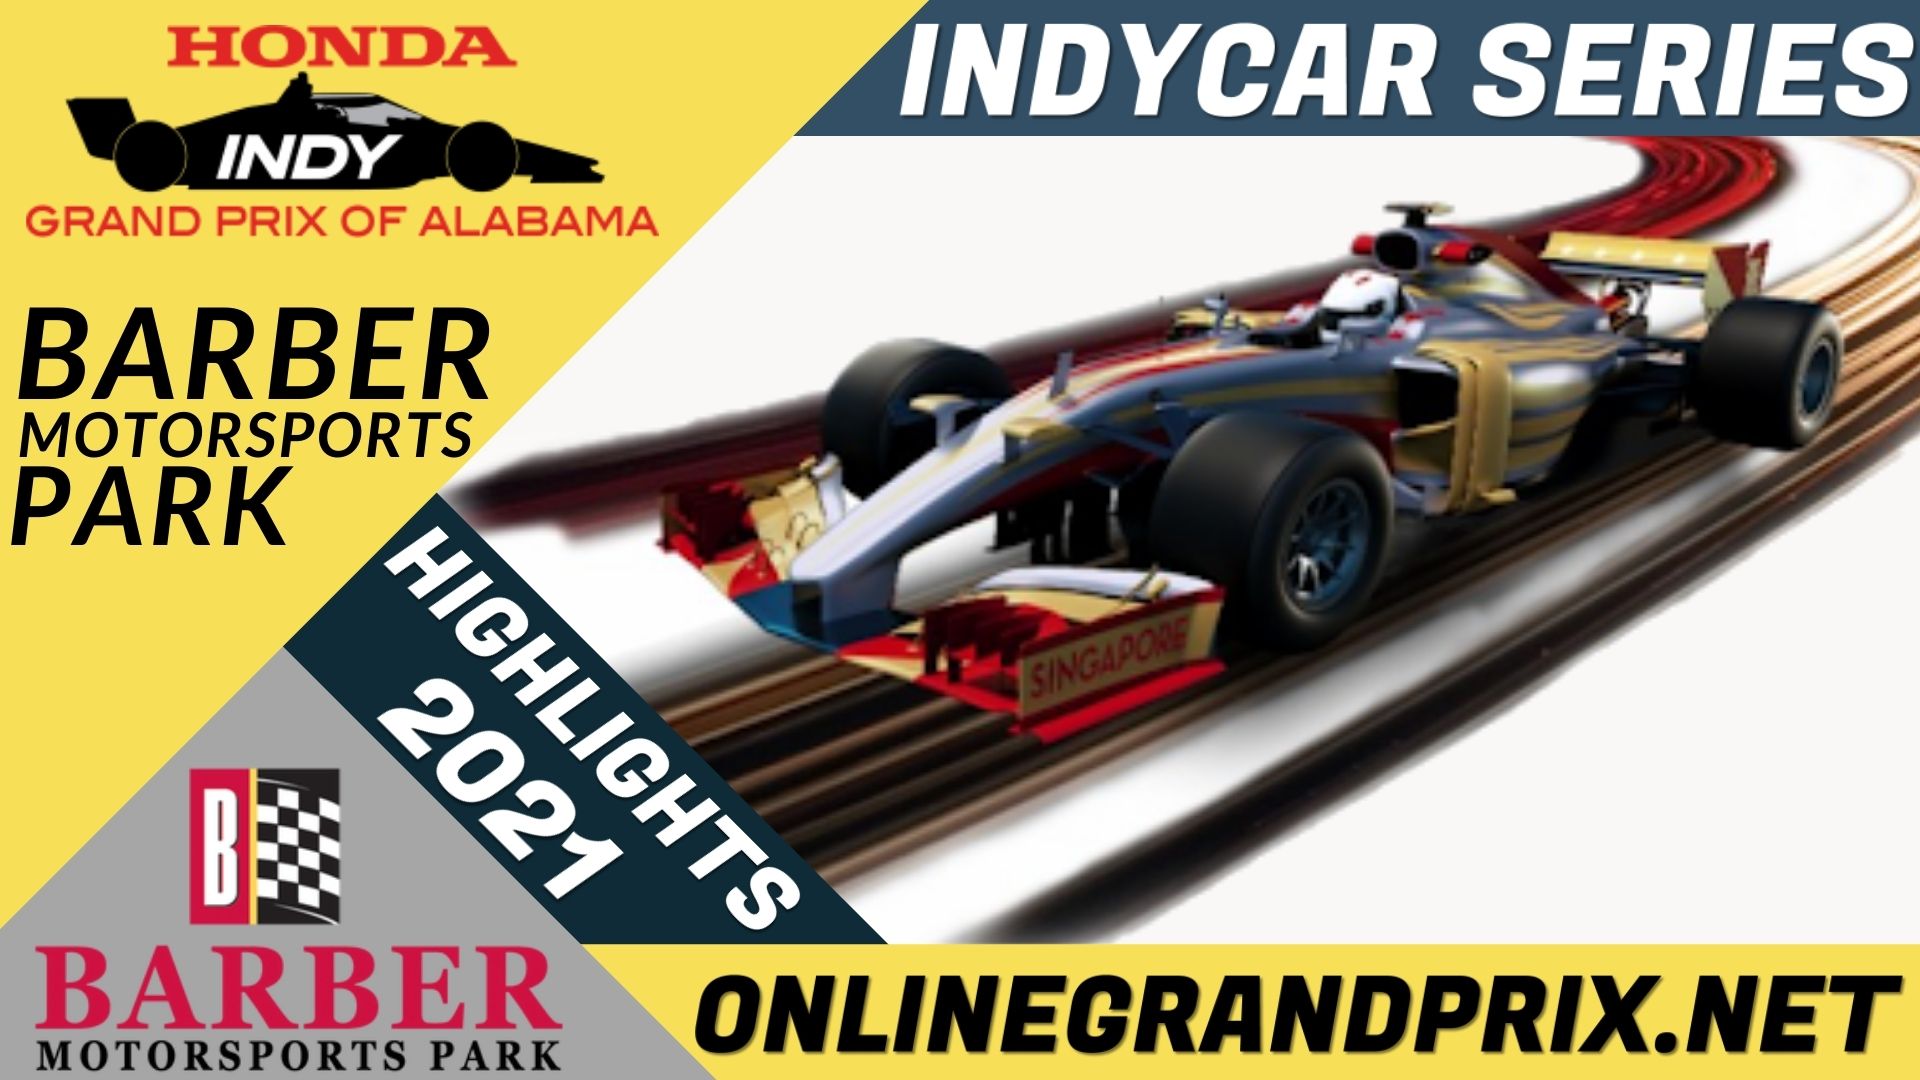 Honda INDY Grand Prix Of Alabama Highlights INDYCAR 2021